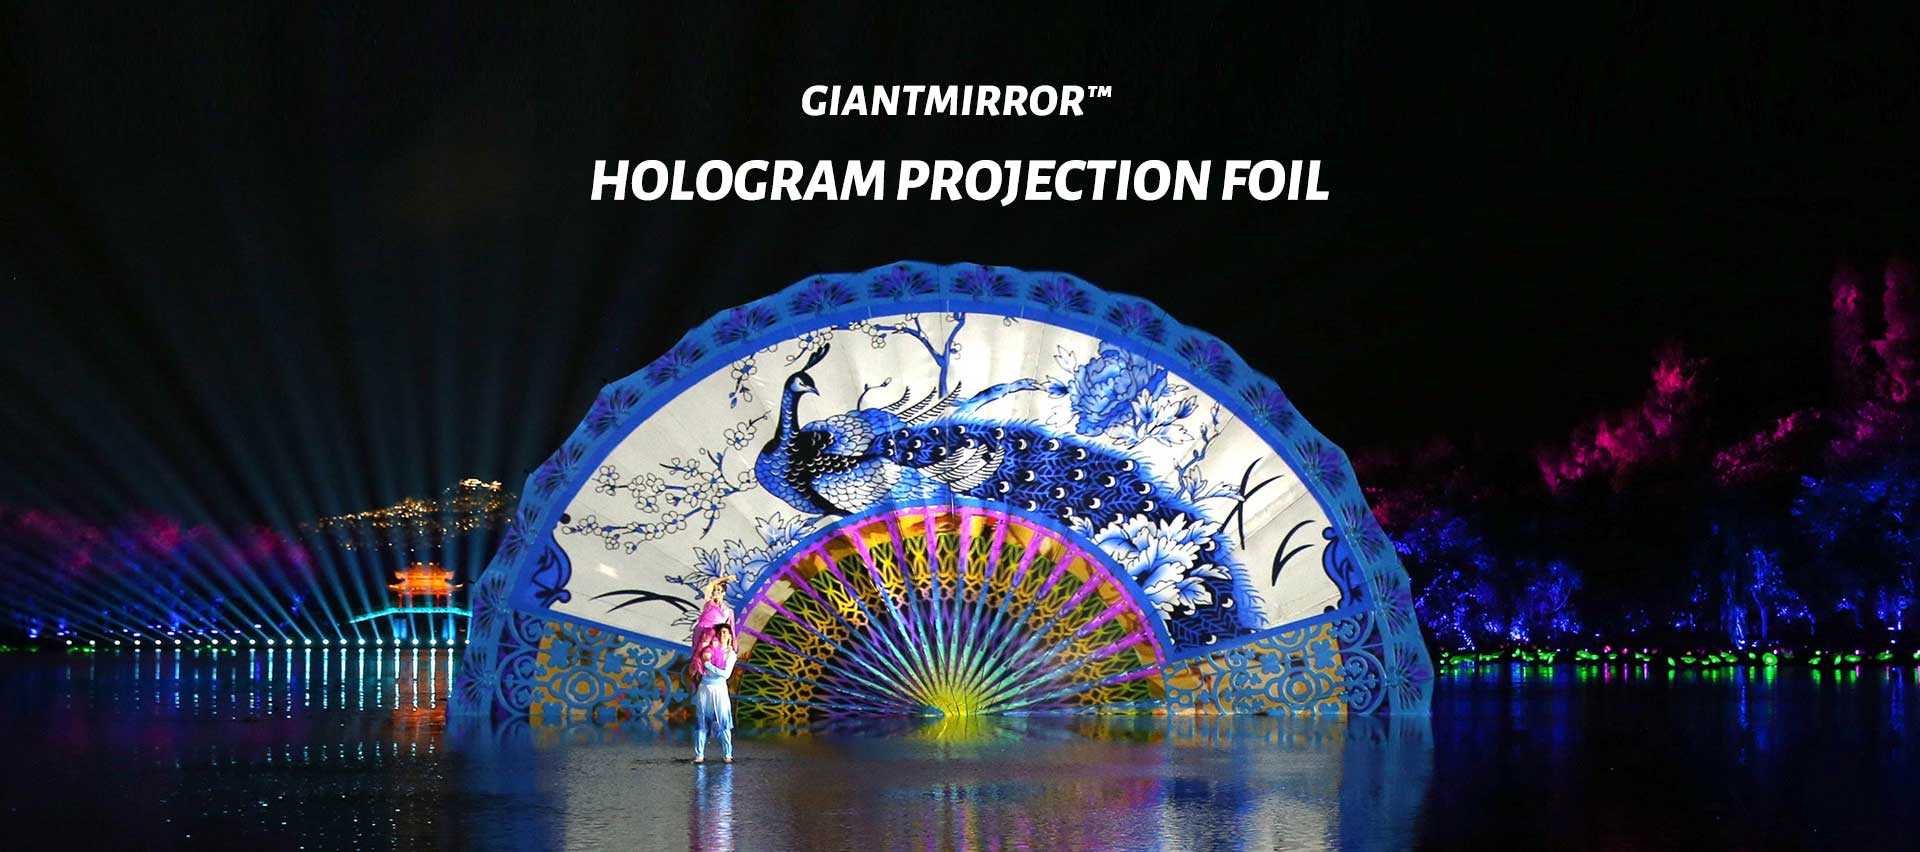 HOLOGRAM PROJECTION FOIL